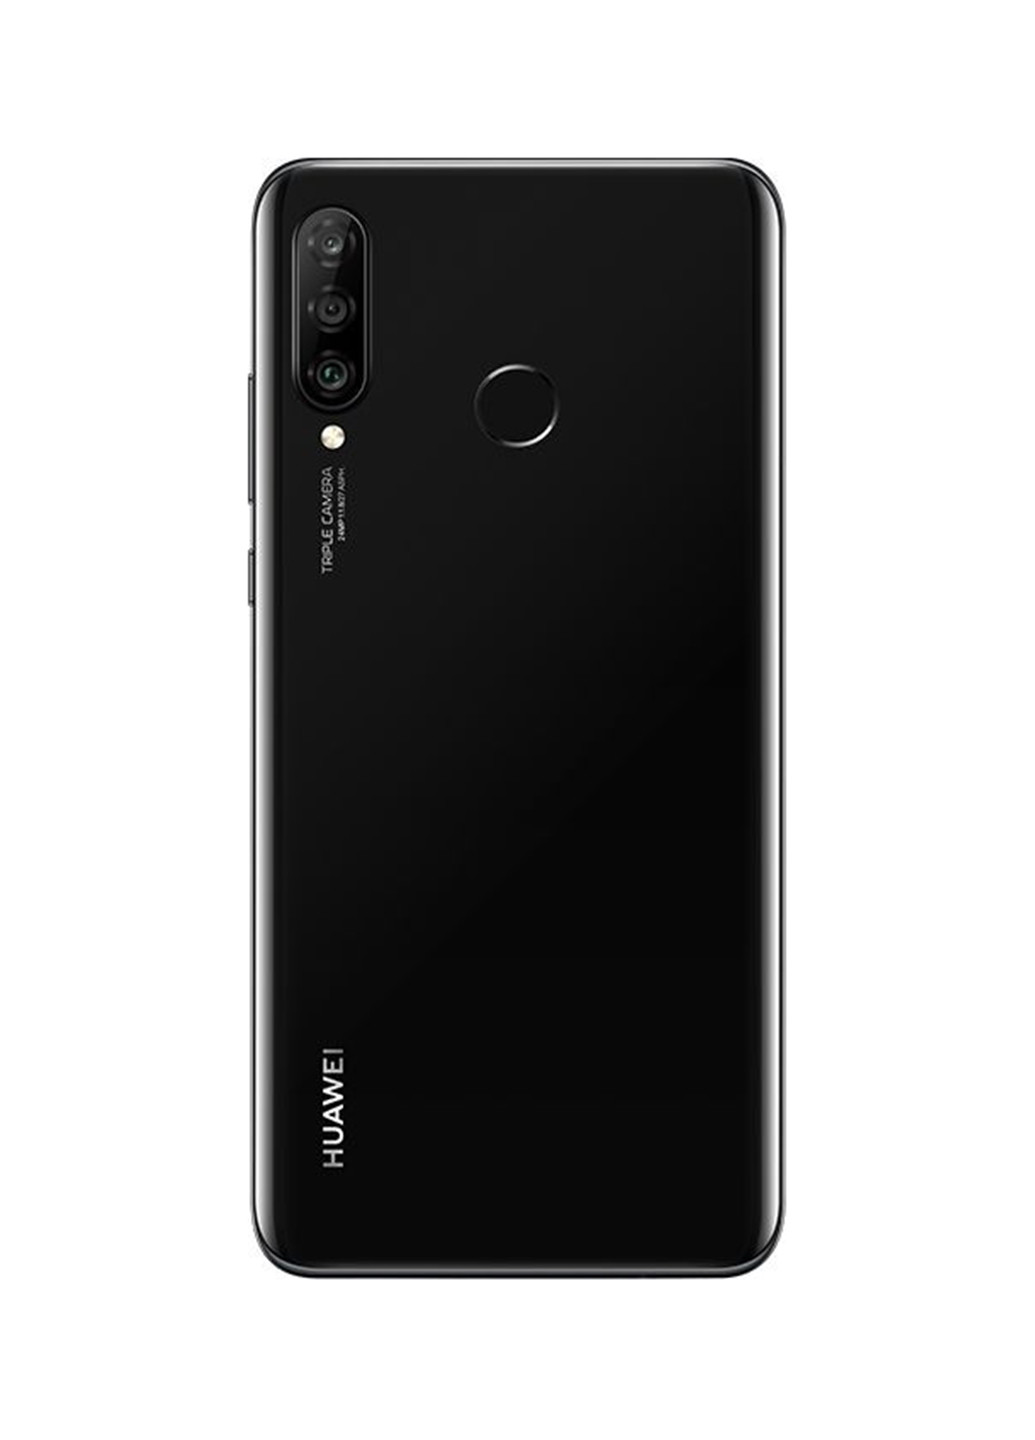 Смартфон Huawei p30 lite 4/128gb midnight black (mar-lх1a) (163174113)